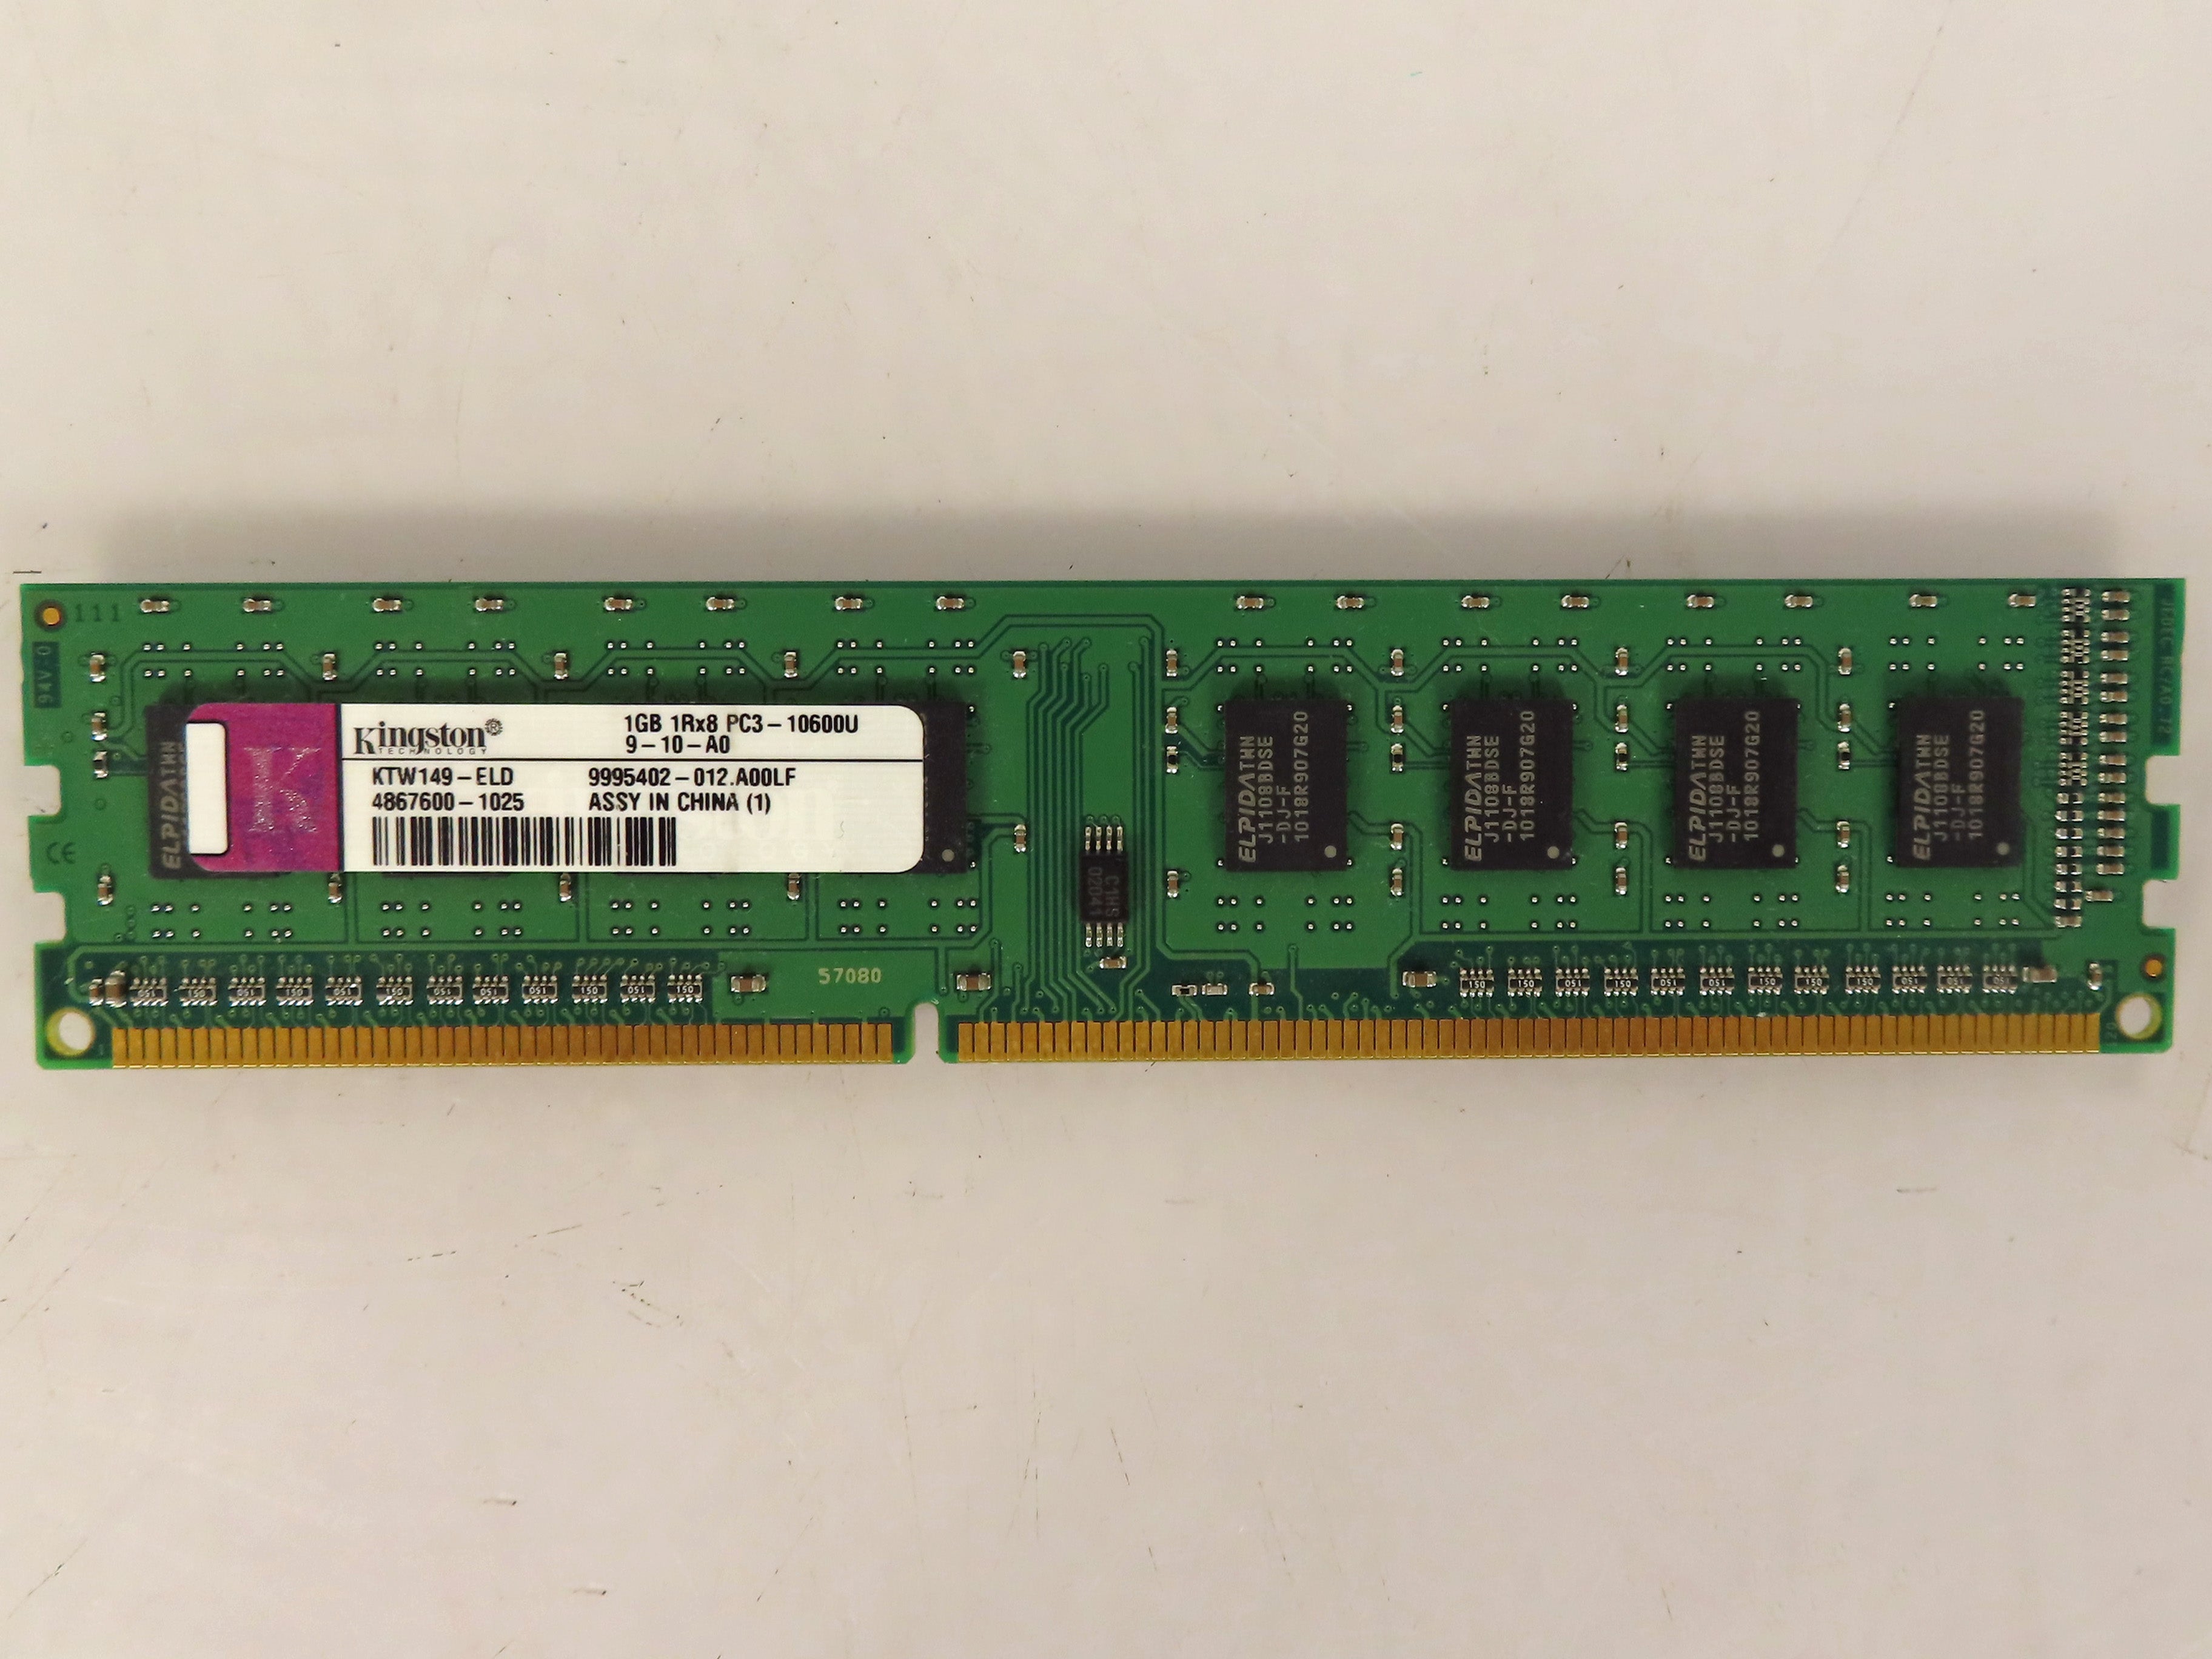 Assorted 1GB 1Rx8 PC3 10600U DIMM Desktop RAM